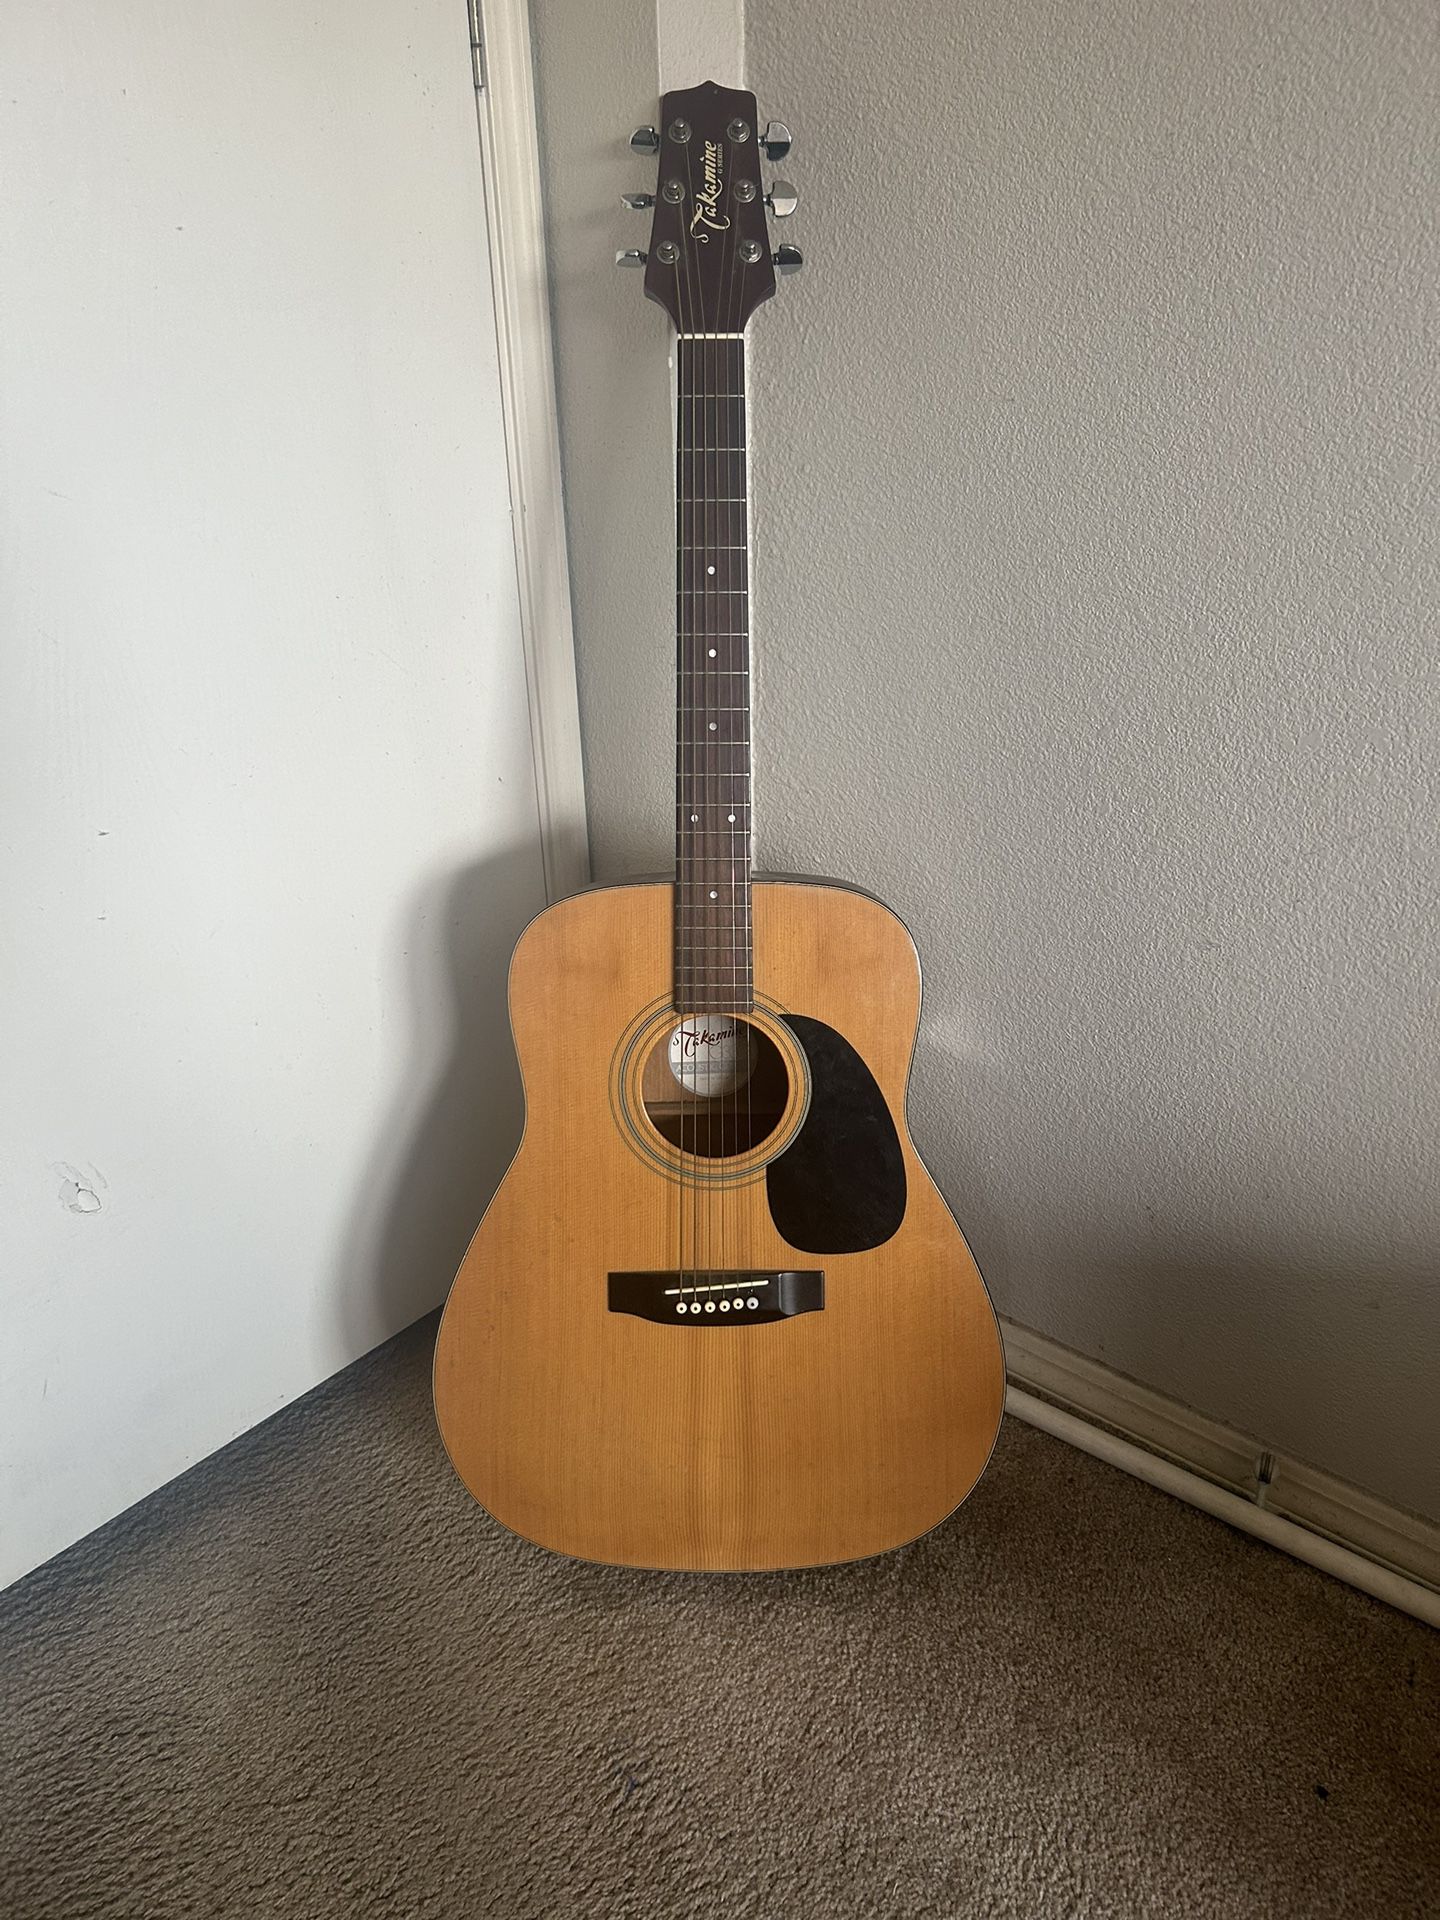 Takamine acoustic guitar